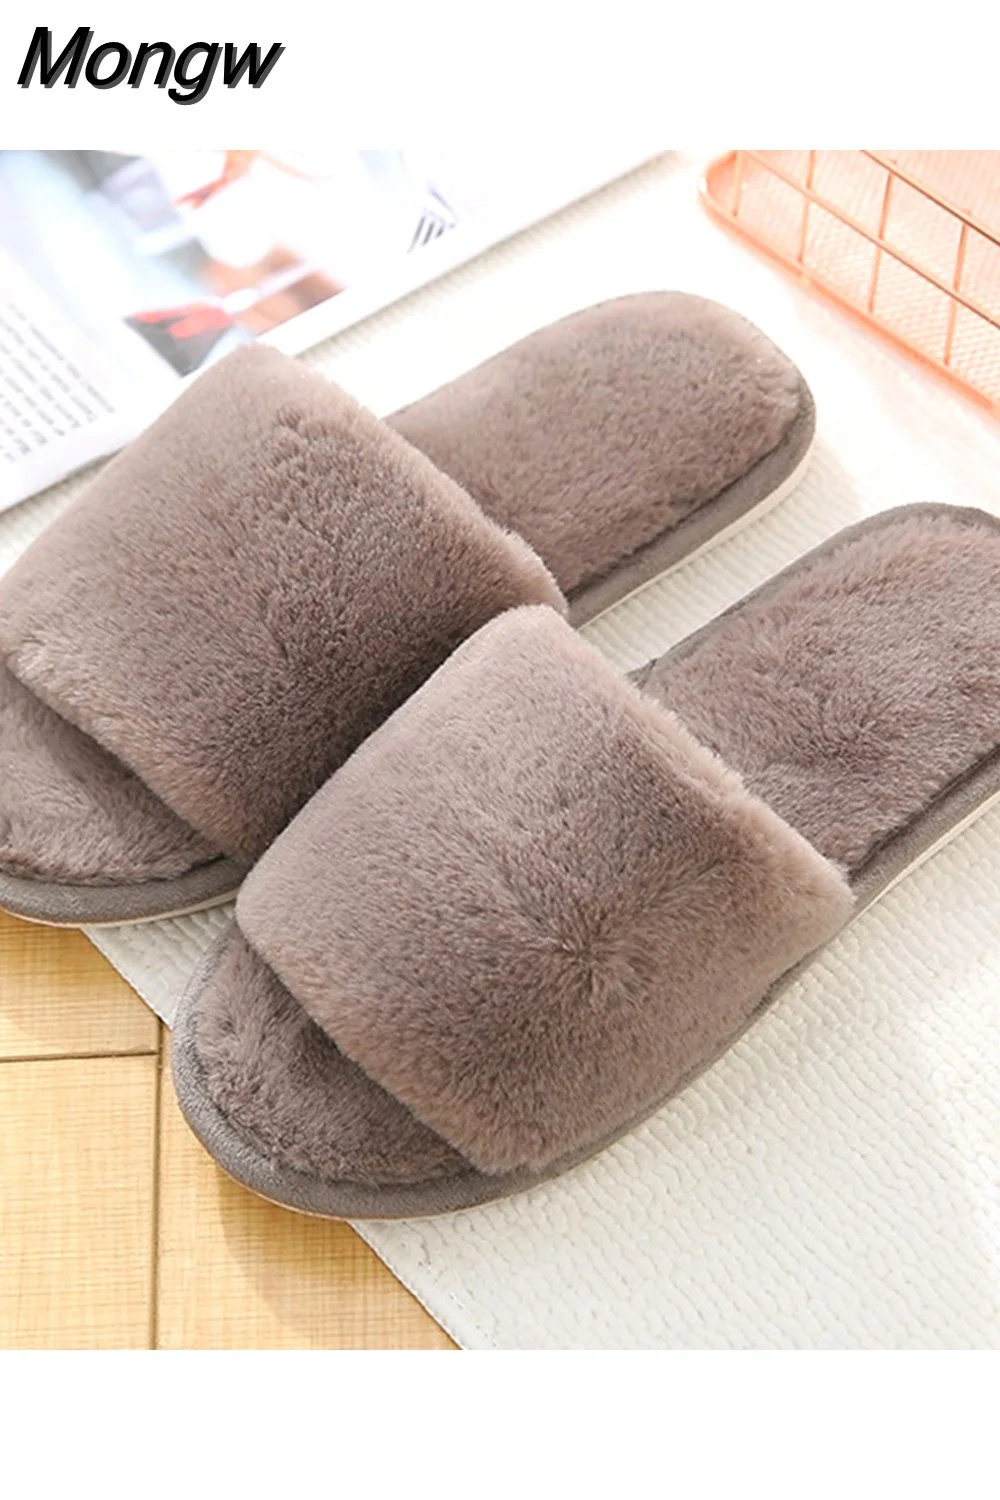 Mongw Women Faux Fur Warm Slippers Winter House Slide Fluffy Flat Shoes Female Slip on Home Furry Cotton Slippers